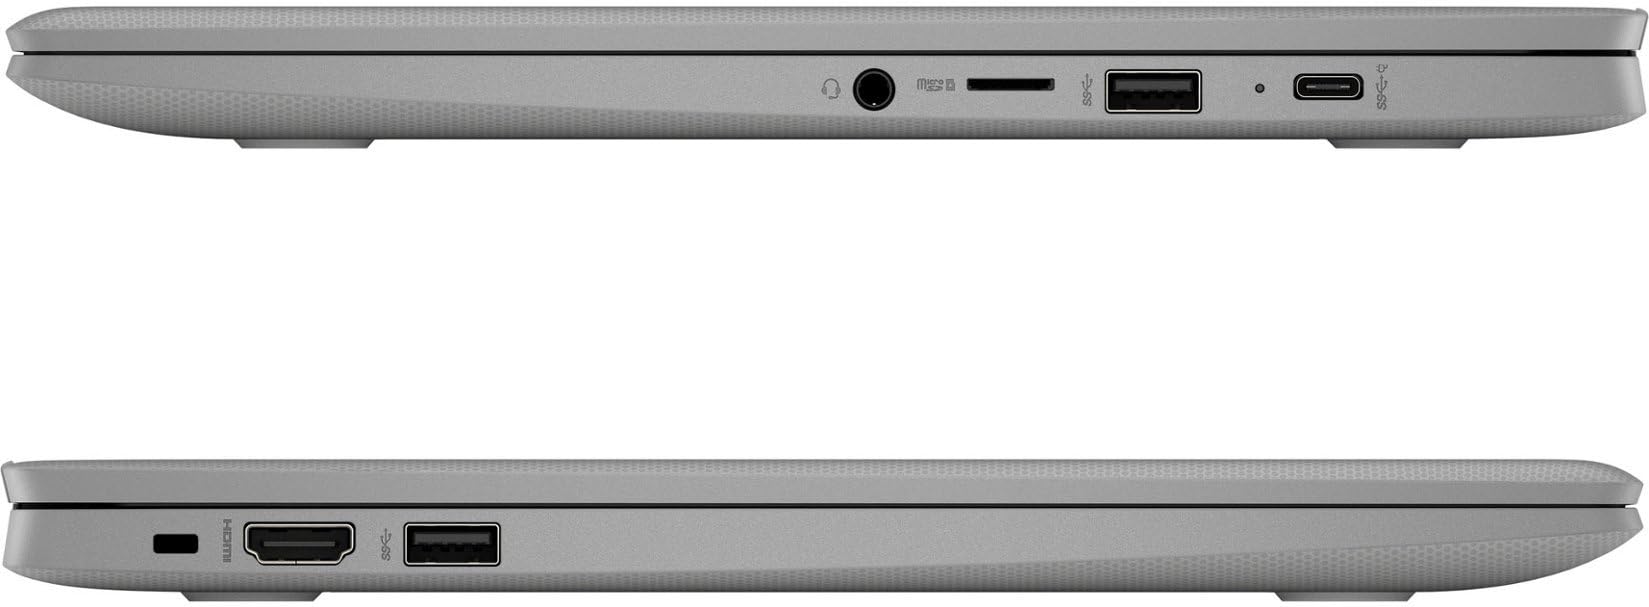 HP HD 14" Chromebook Laptop for Student and Business, Intel Celeron Processor N4120, 4GB RAM 128GB Storage(64GB eMMC + 5ave 64GB Flash Memory), Wi-Fi, Bluetooth, HDMI, Chrome Os, Modern Gray